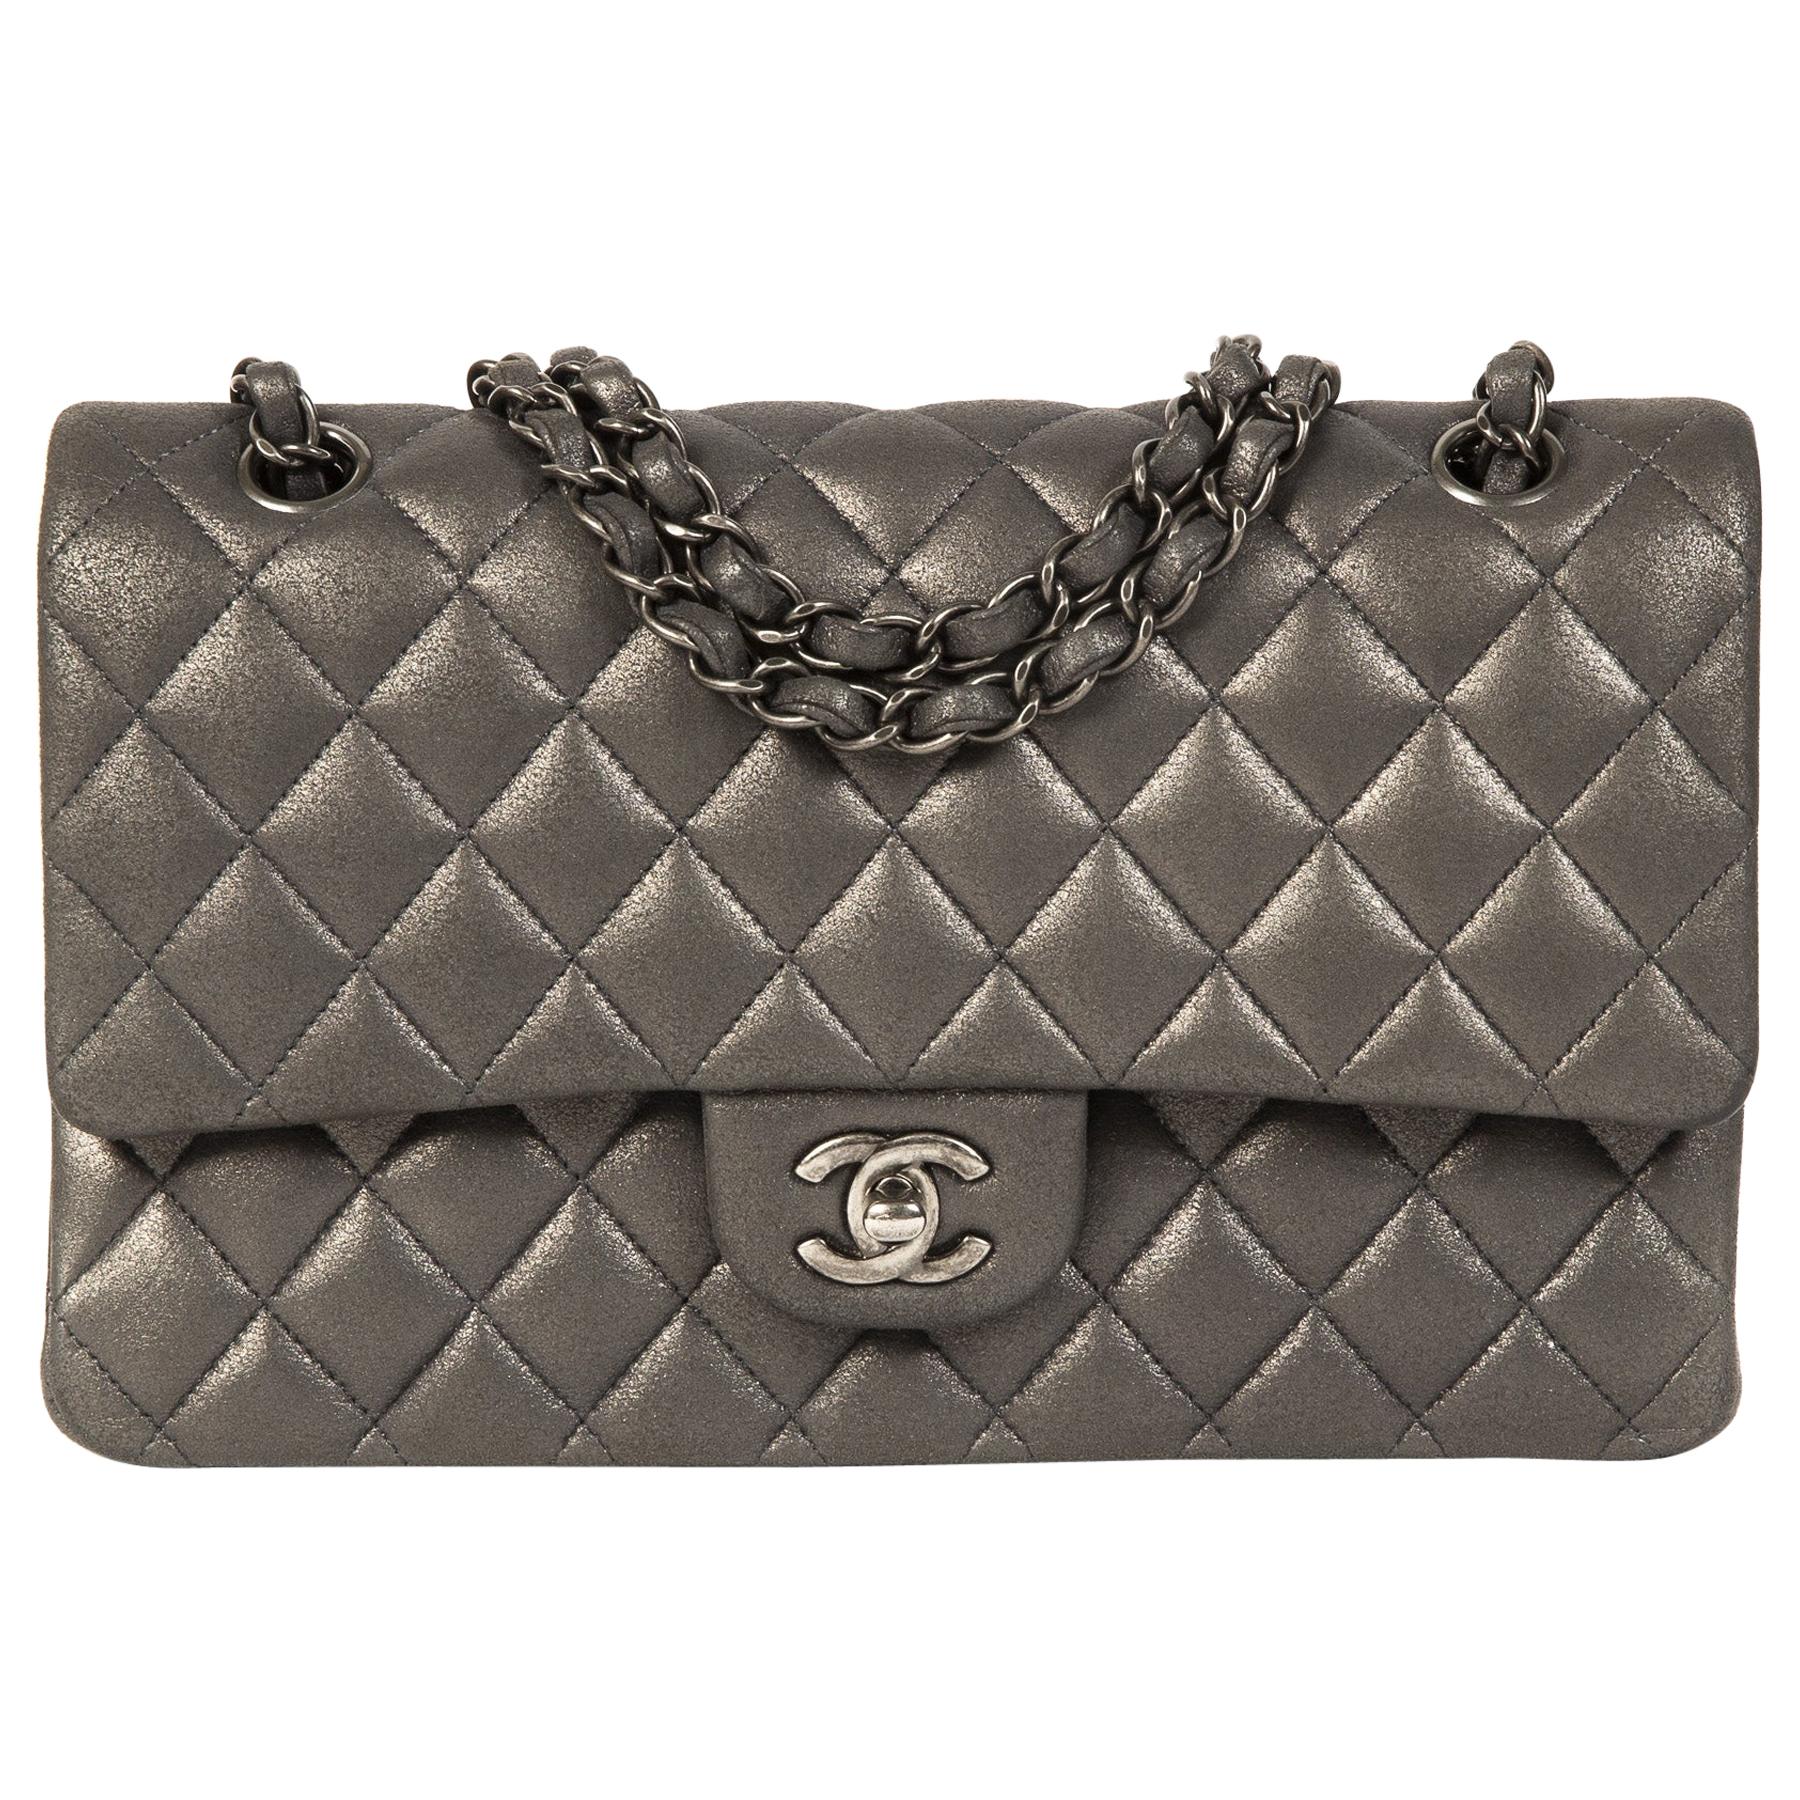 Chanel Medium Classic Flap Bag Metallic Silver